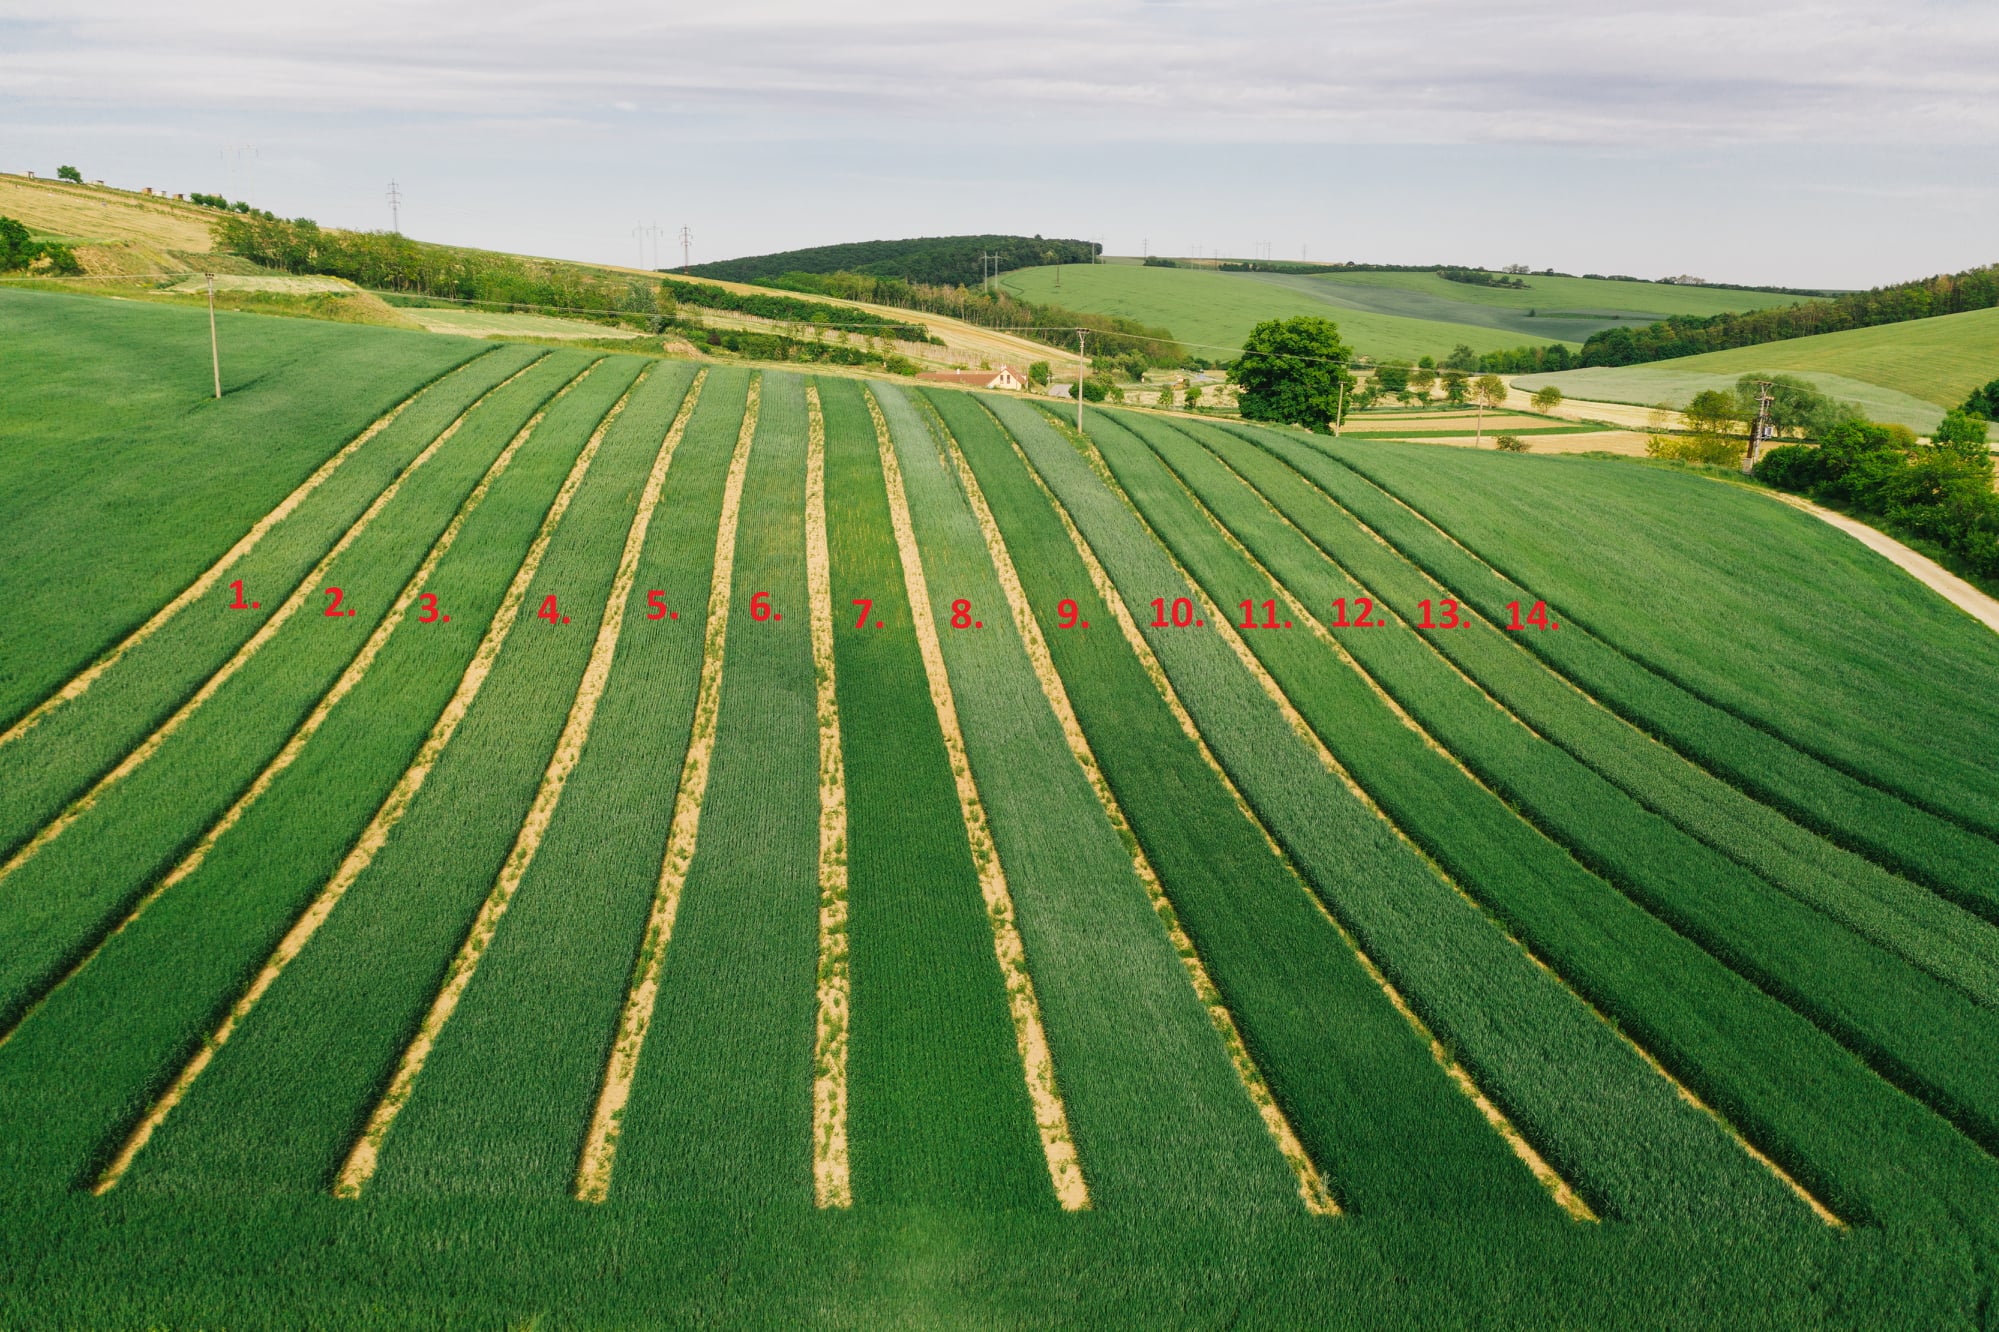 PROBIO multiplied 14 wheat varieties